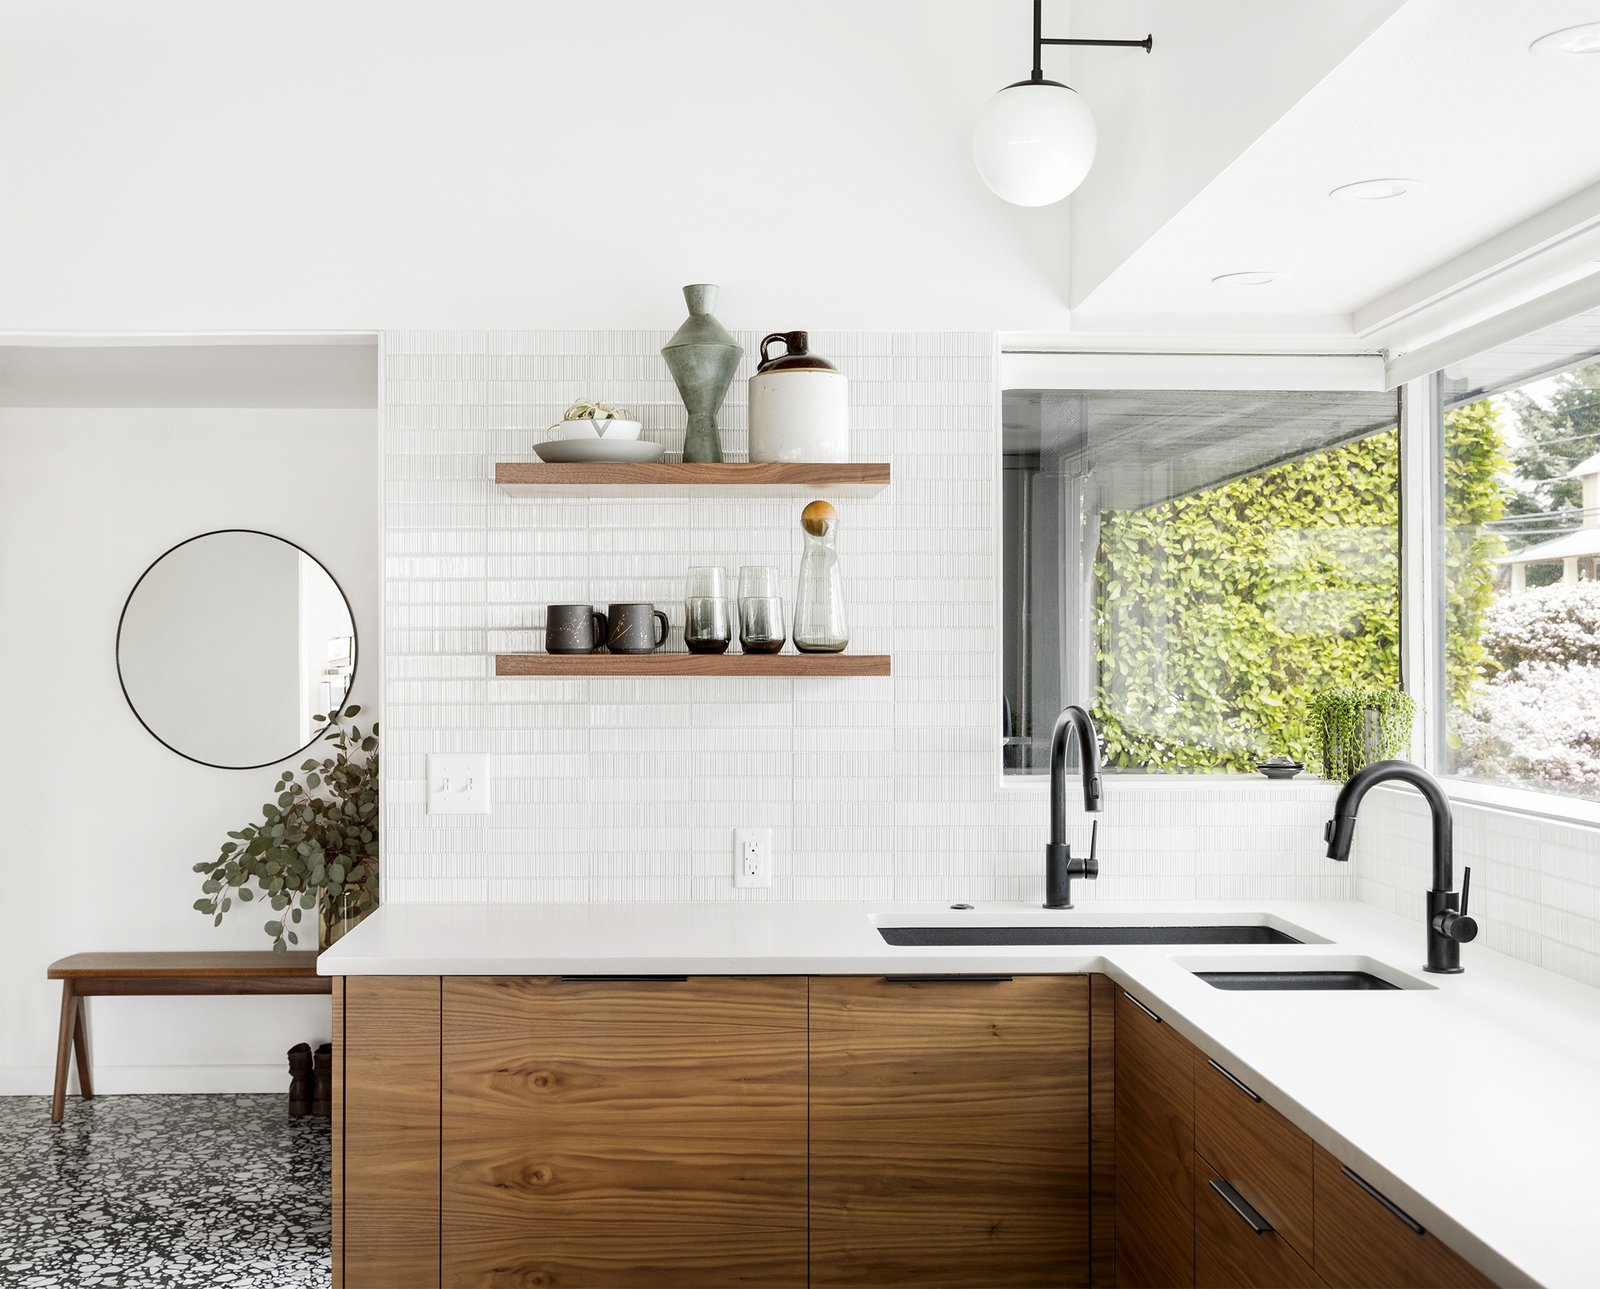 Designer Stephanie Dyer’s Remodeling Tips for the Kitchen